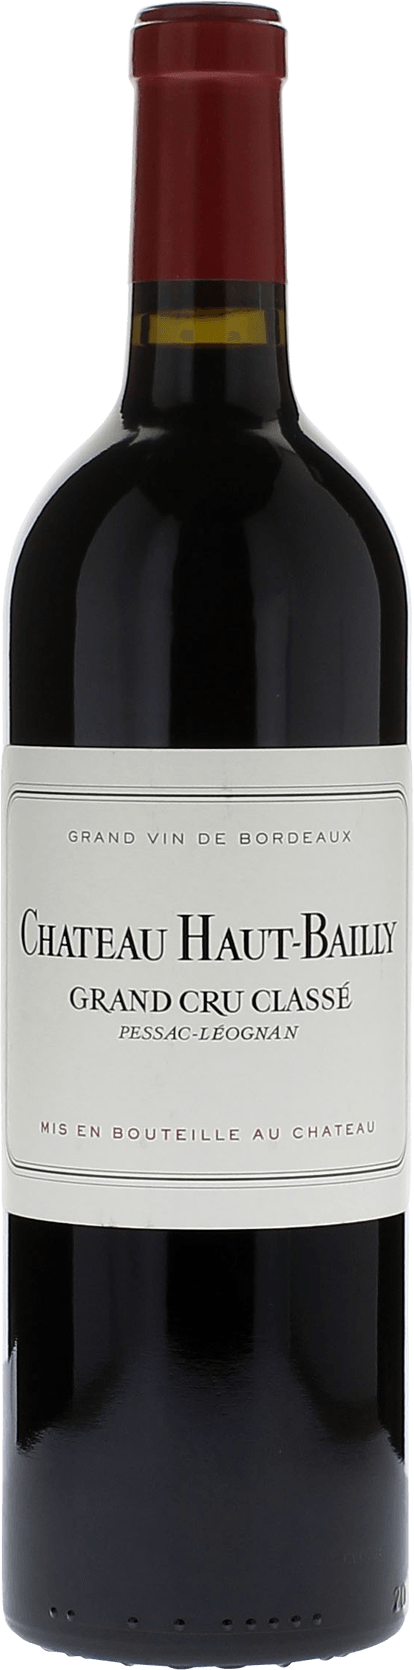 Haut bailly 2001 cru class Pessac-Lognan, Bordeaux rouge